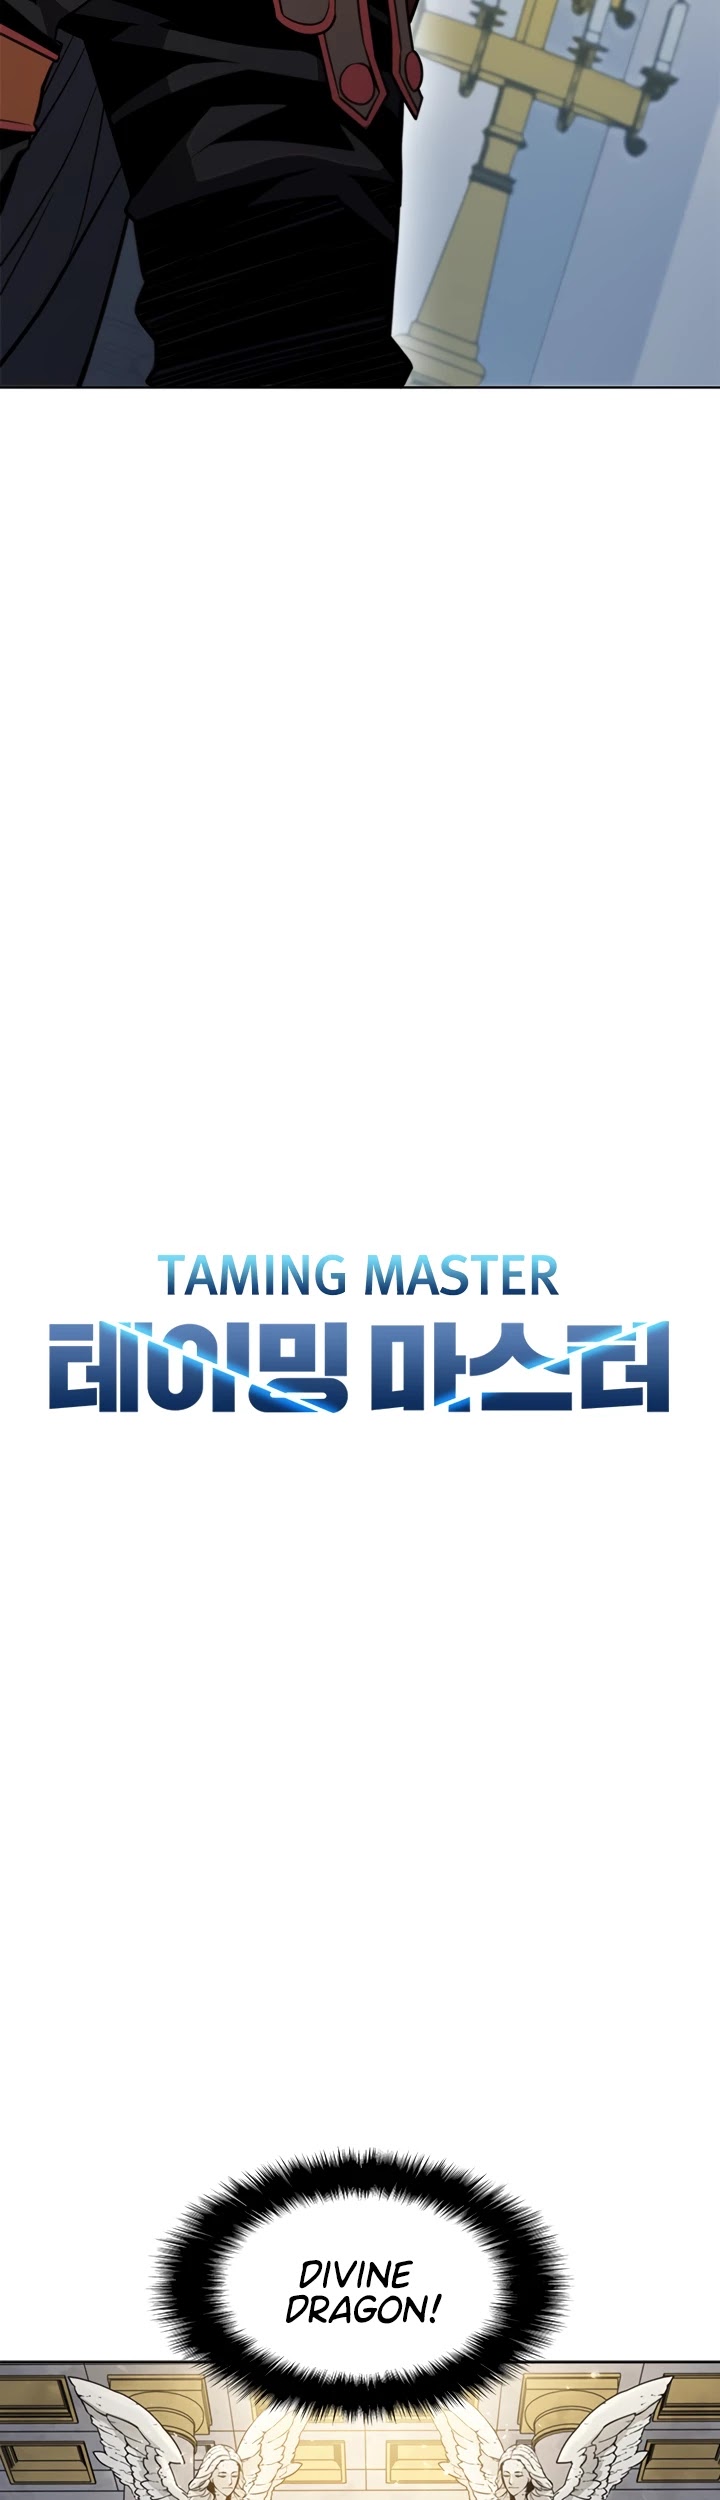 taming master chapter